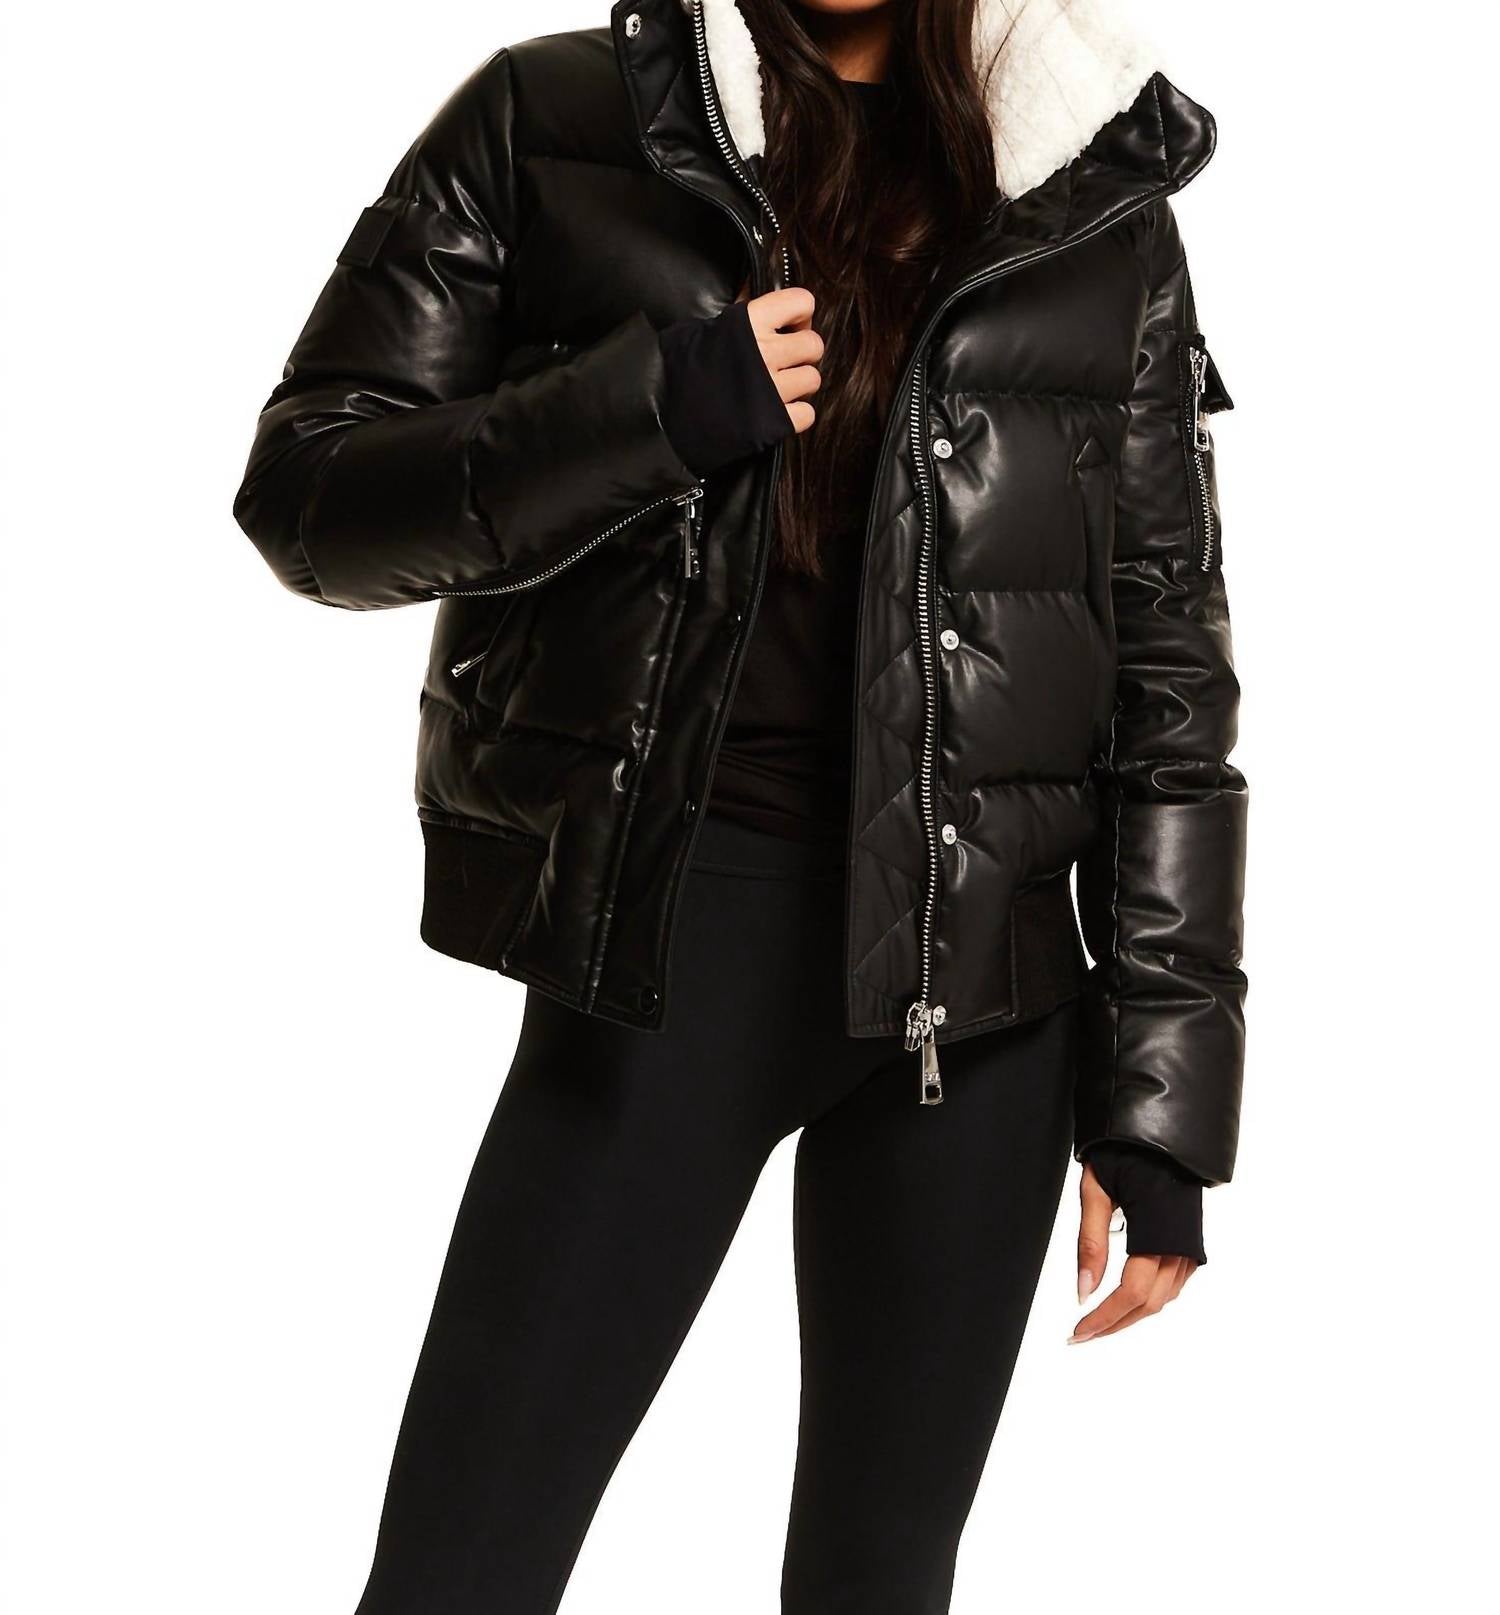 SAM Vegan Leather Allegra Jacket in Black/White